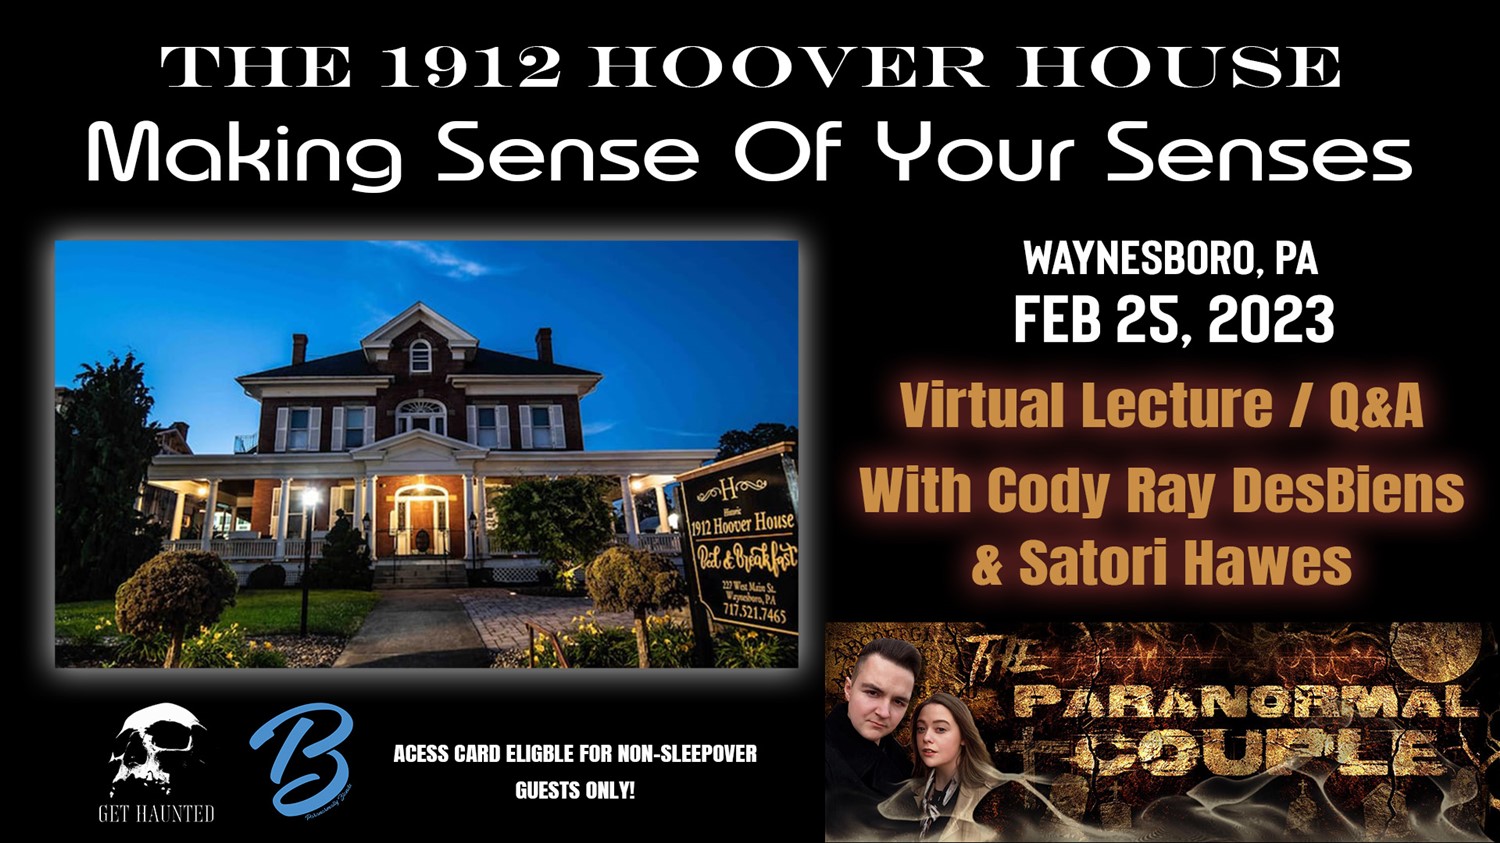 The 1912 Hoover House Making Sense of Your Senses on feb. 25, 16:00@The 1912 Hoover House - Compra entradas y obtén información enThriller Events thriller.events